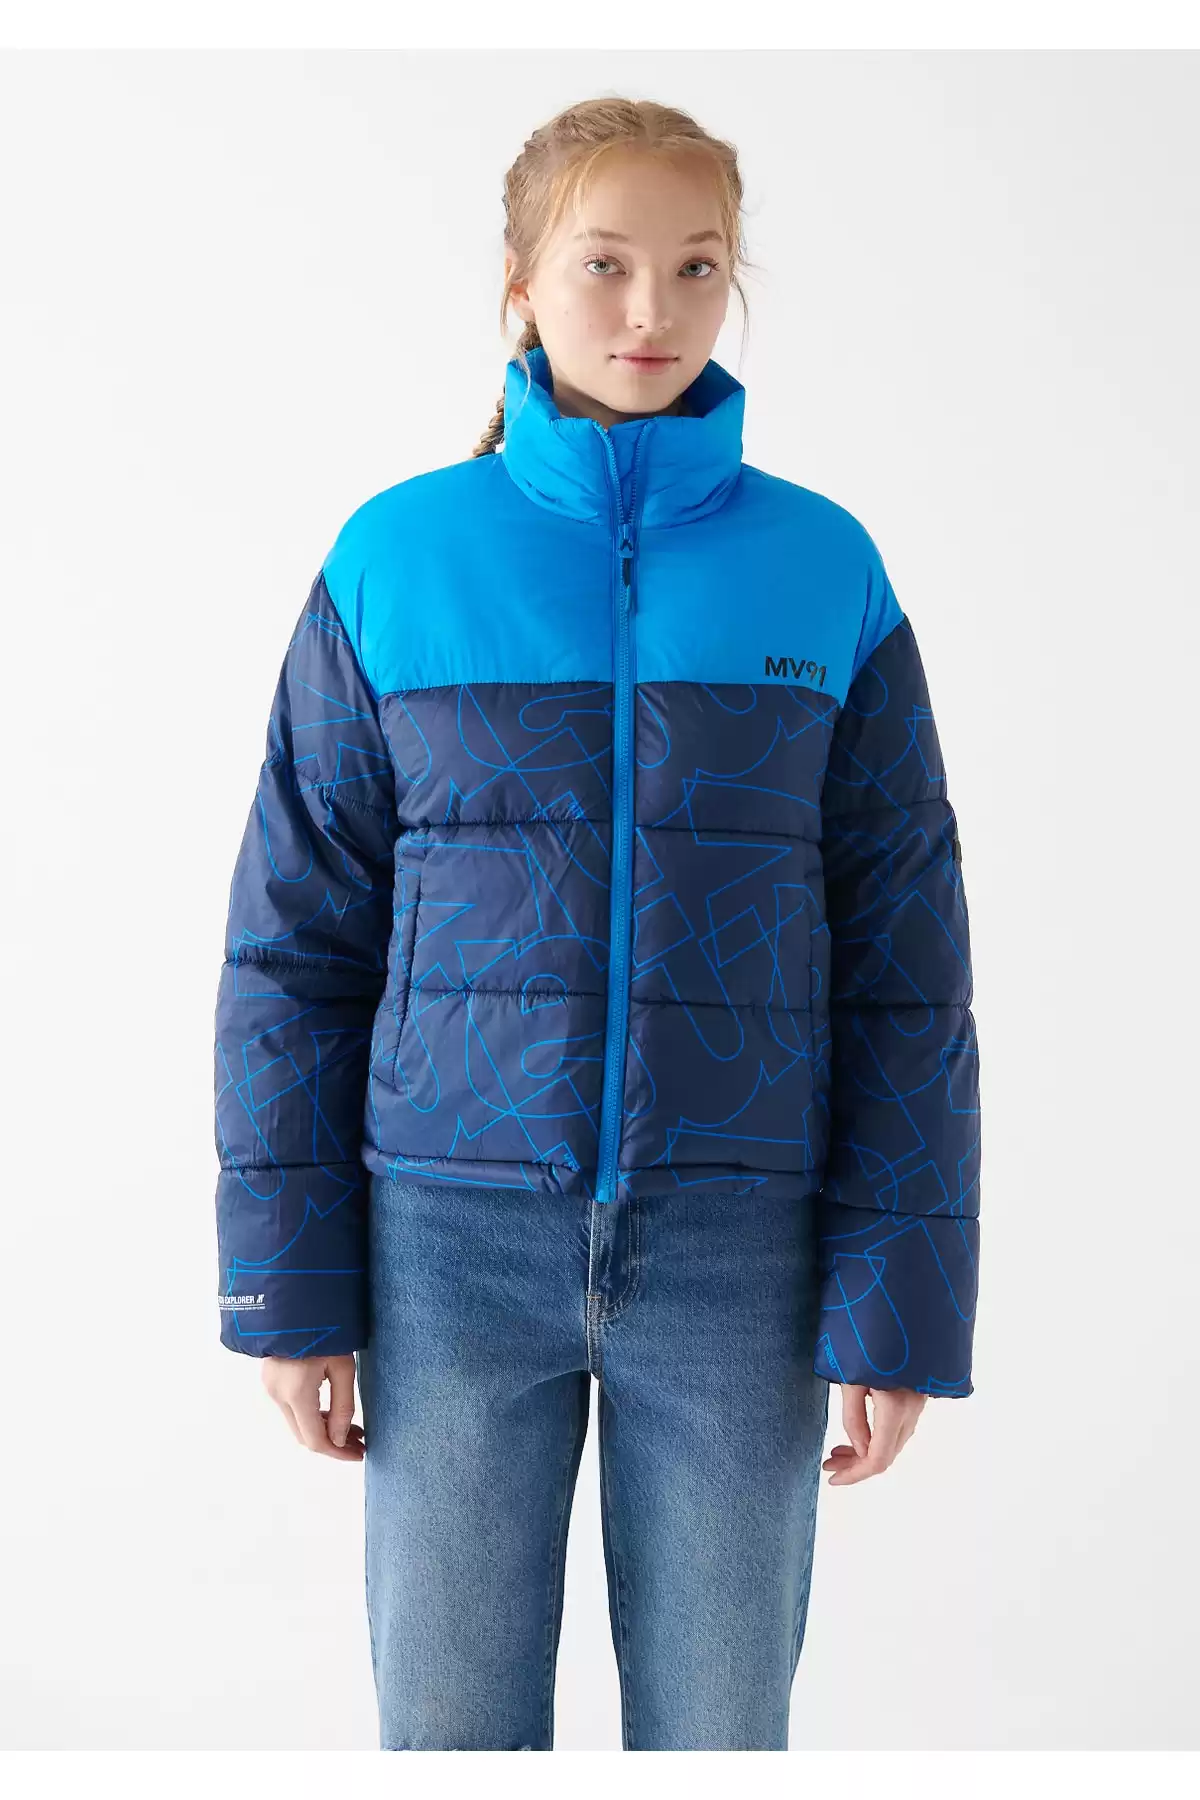 Block Color Down Jacket Loose Fit / Loose Fit 1110114-82815 برند   Mavi(ماوی) به رنگ  آبی سرمه ای مدل  بادی و ضد آب